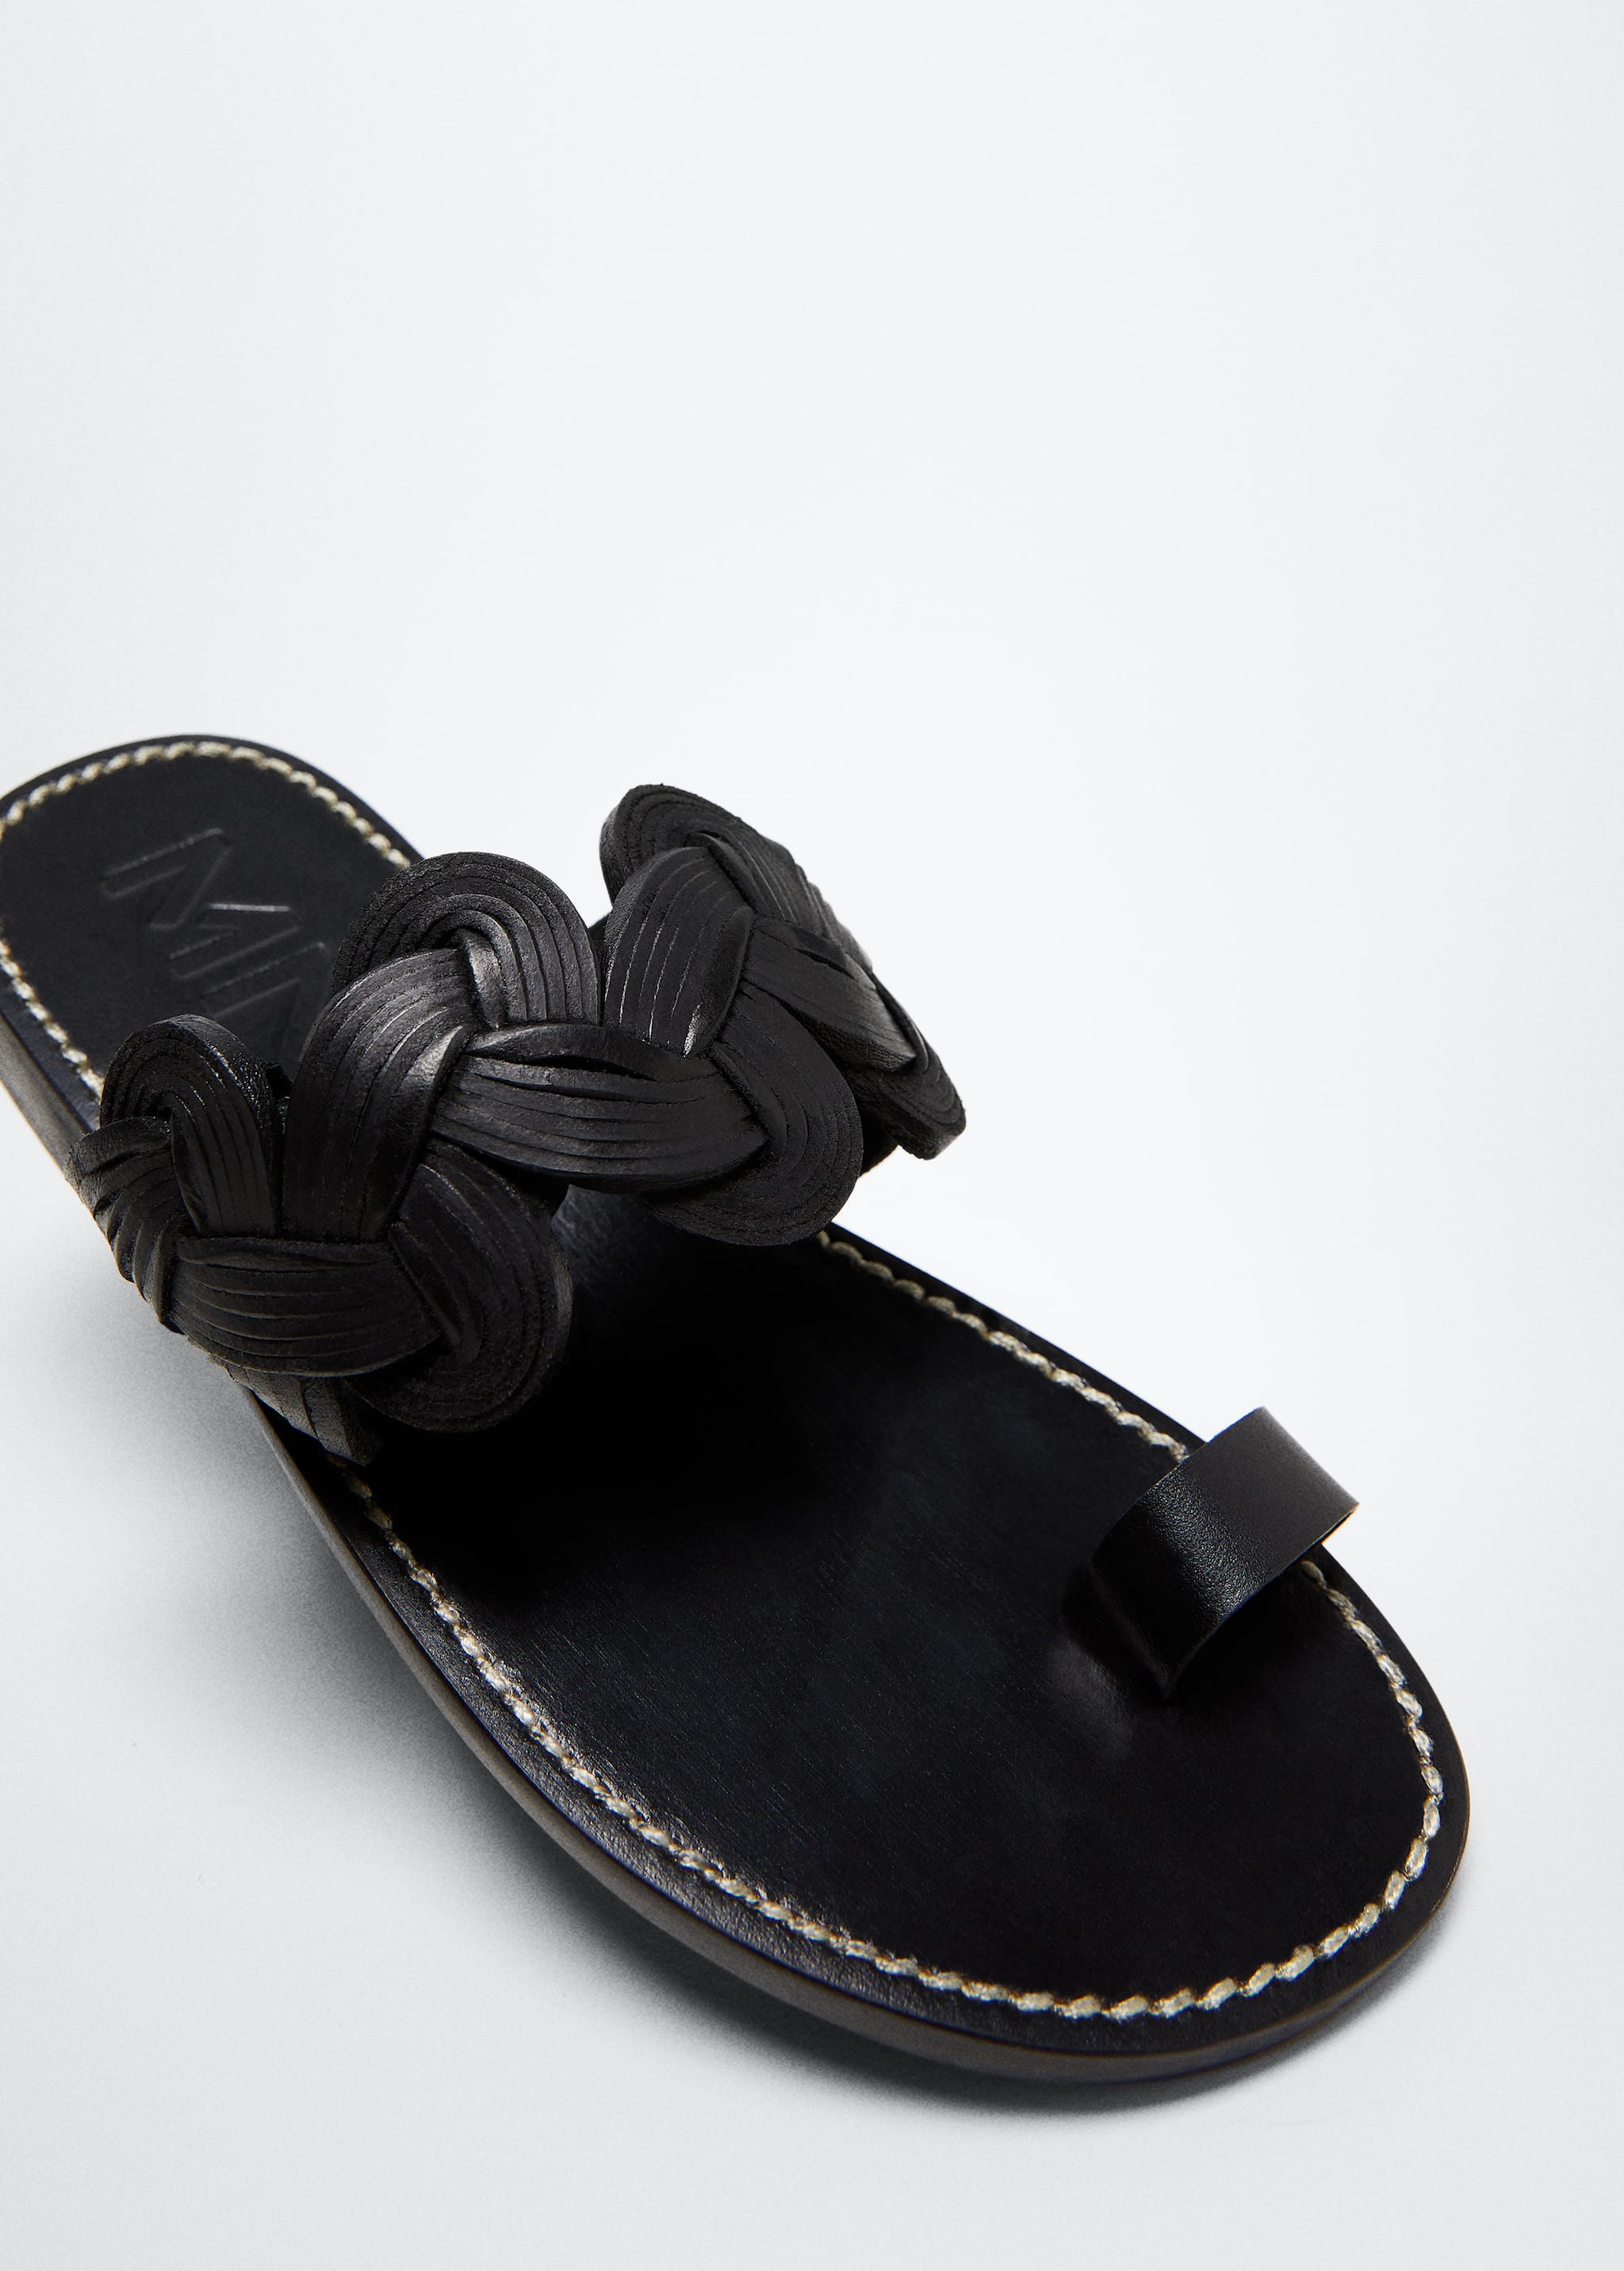 Leather braided sandals - Medium plane